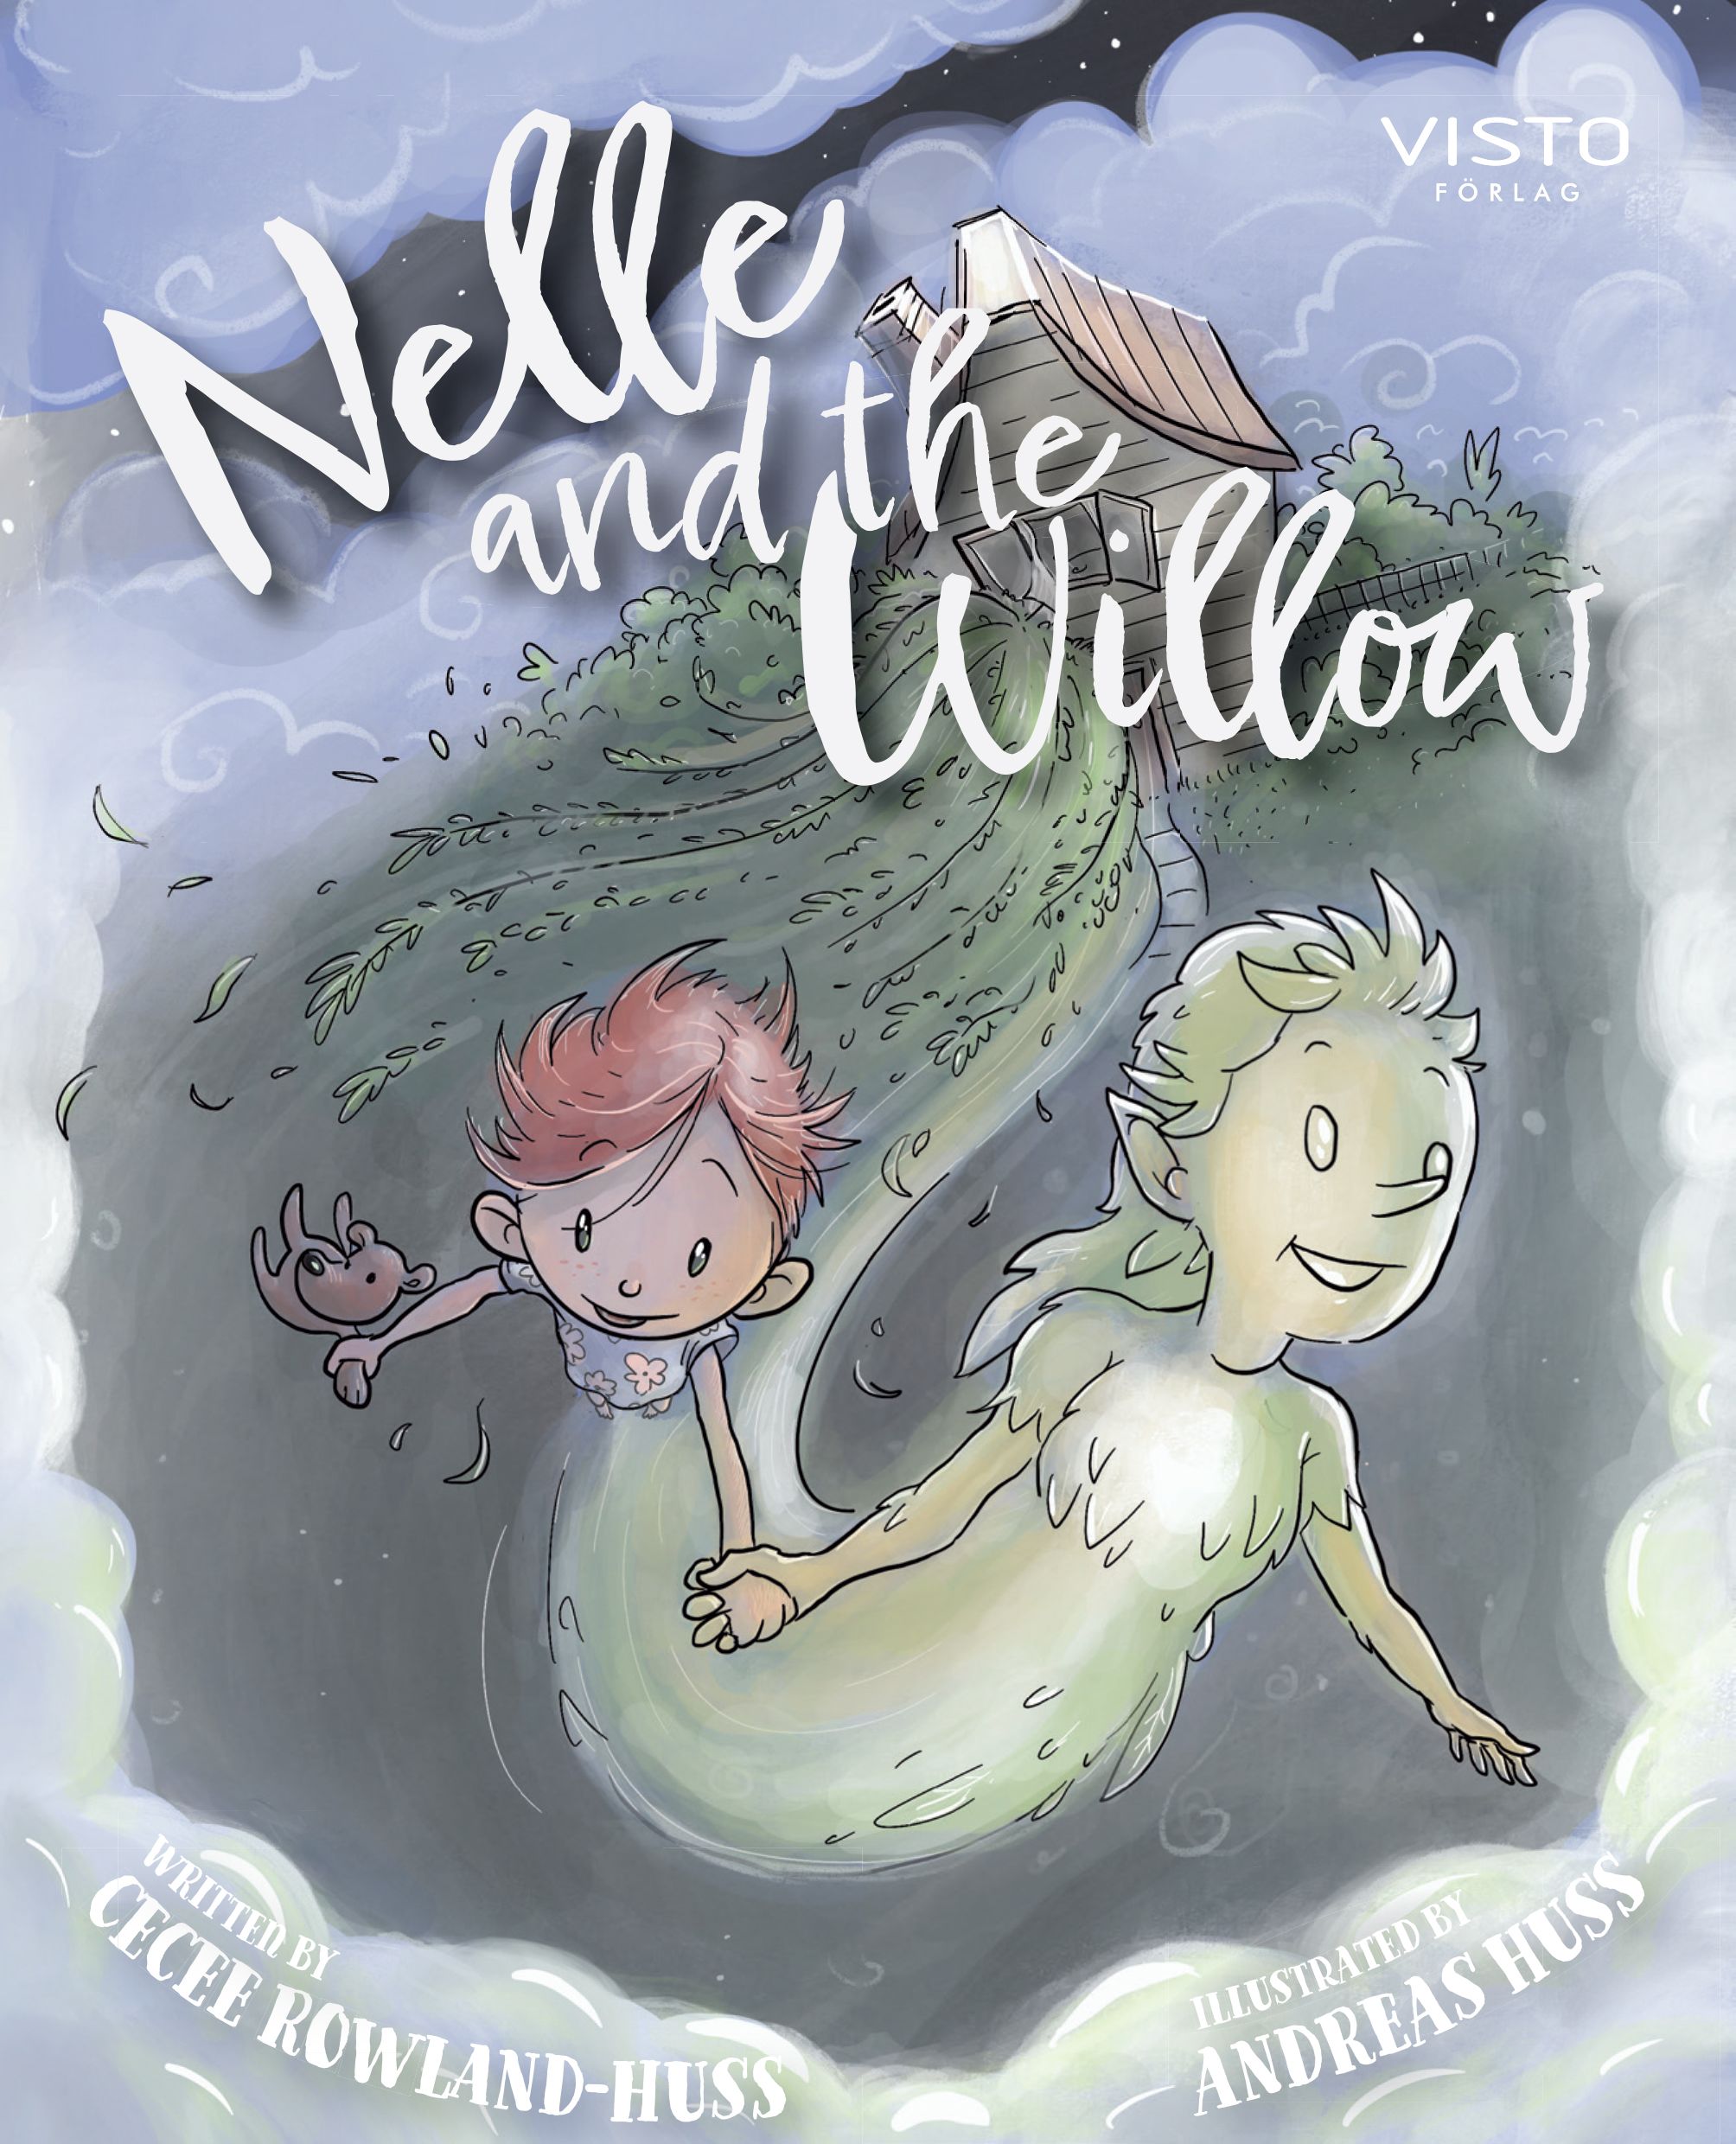 Nelle and the Willow, e-bok av Cecee Rowland-Huss